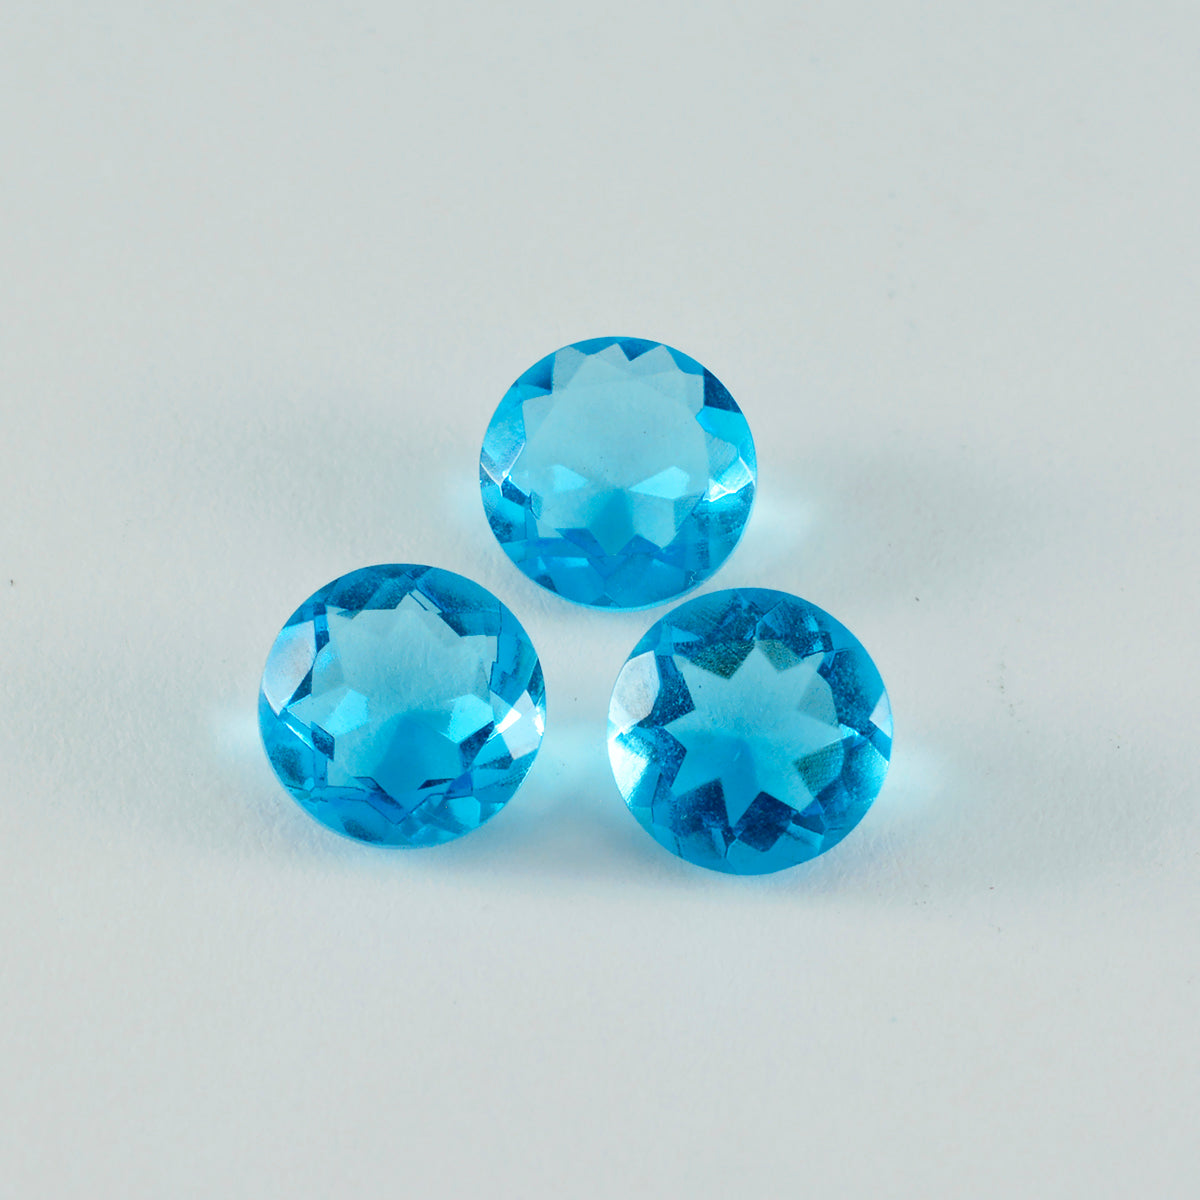 Riyogems 1PC Blue Topaz CZ Faceted 15x15 mm Round Shape Good Quality Loose Stone